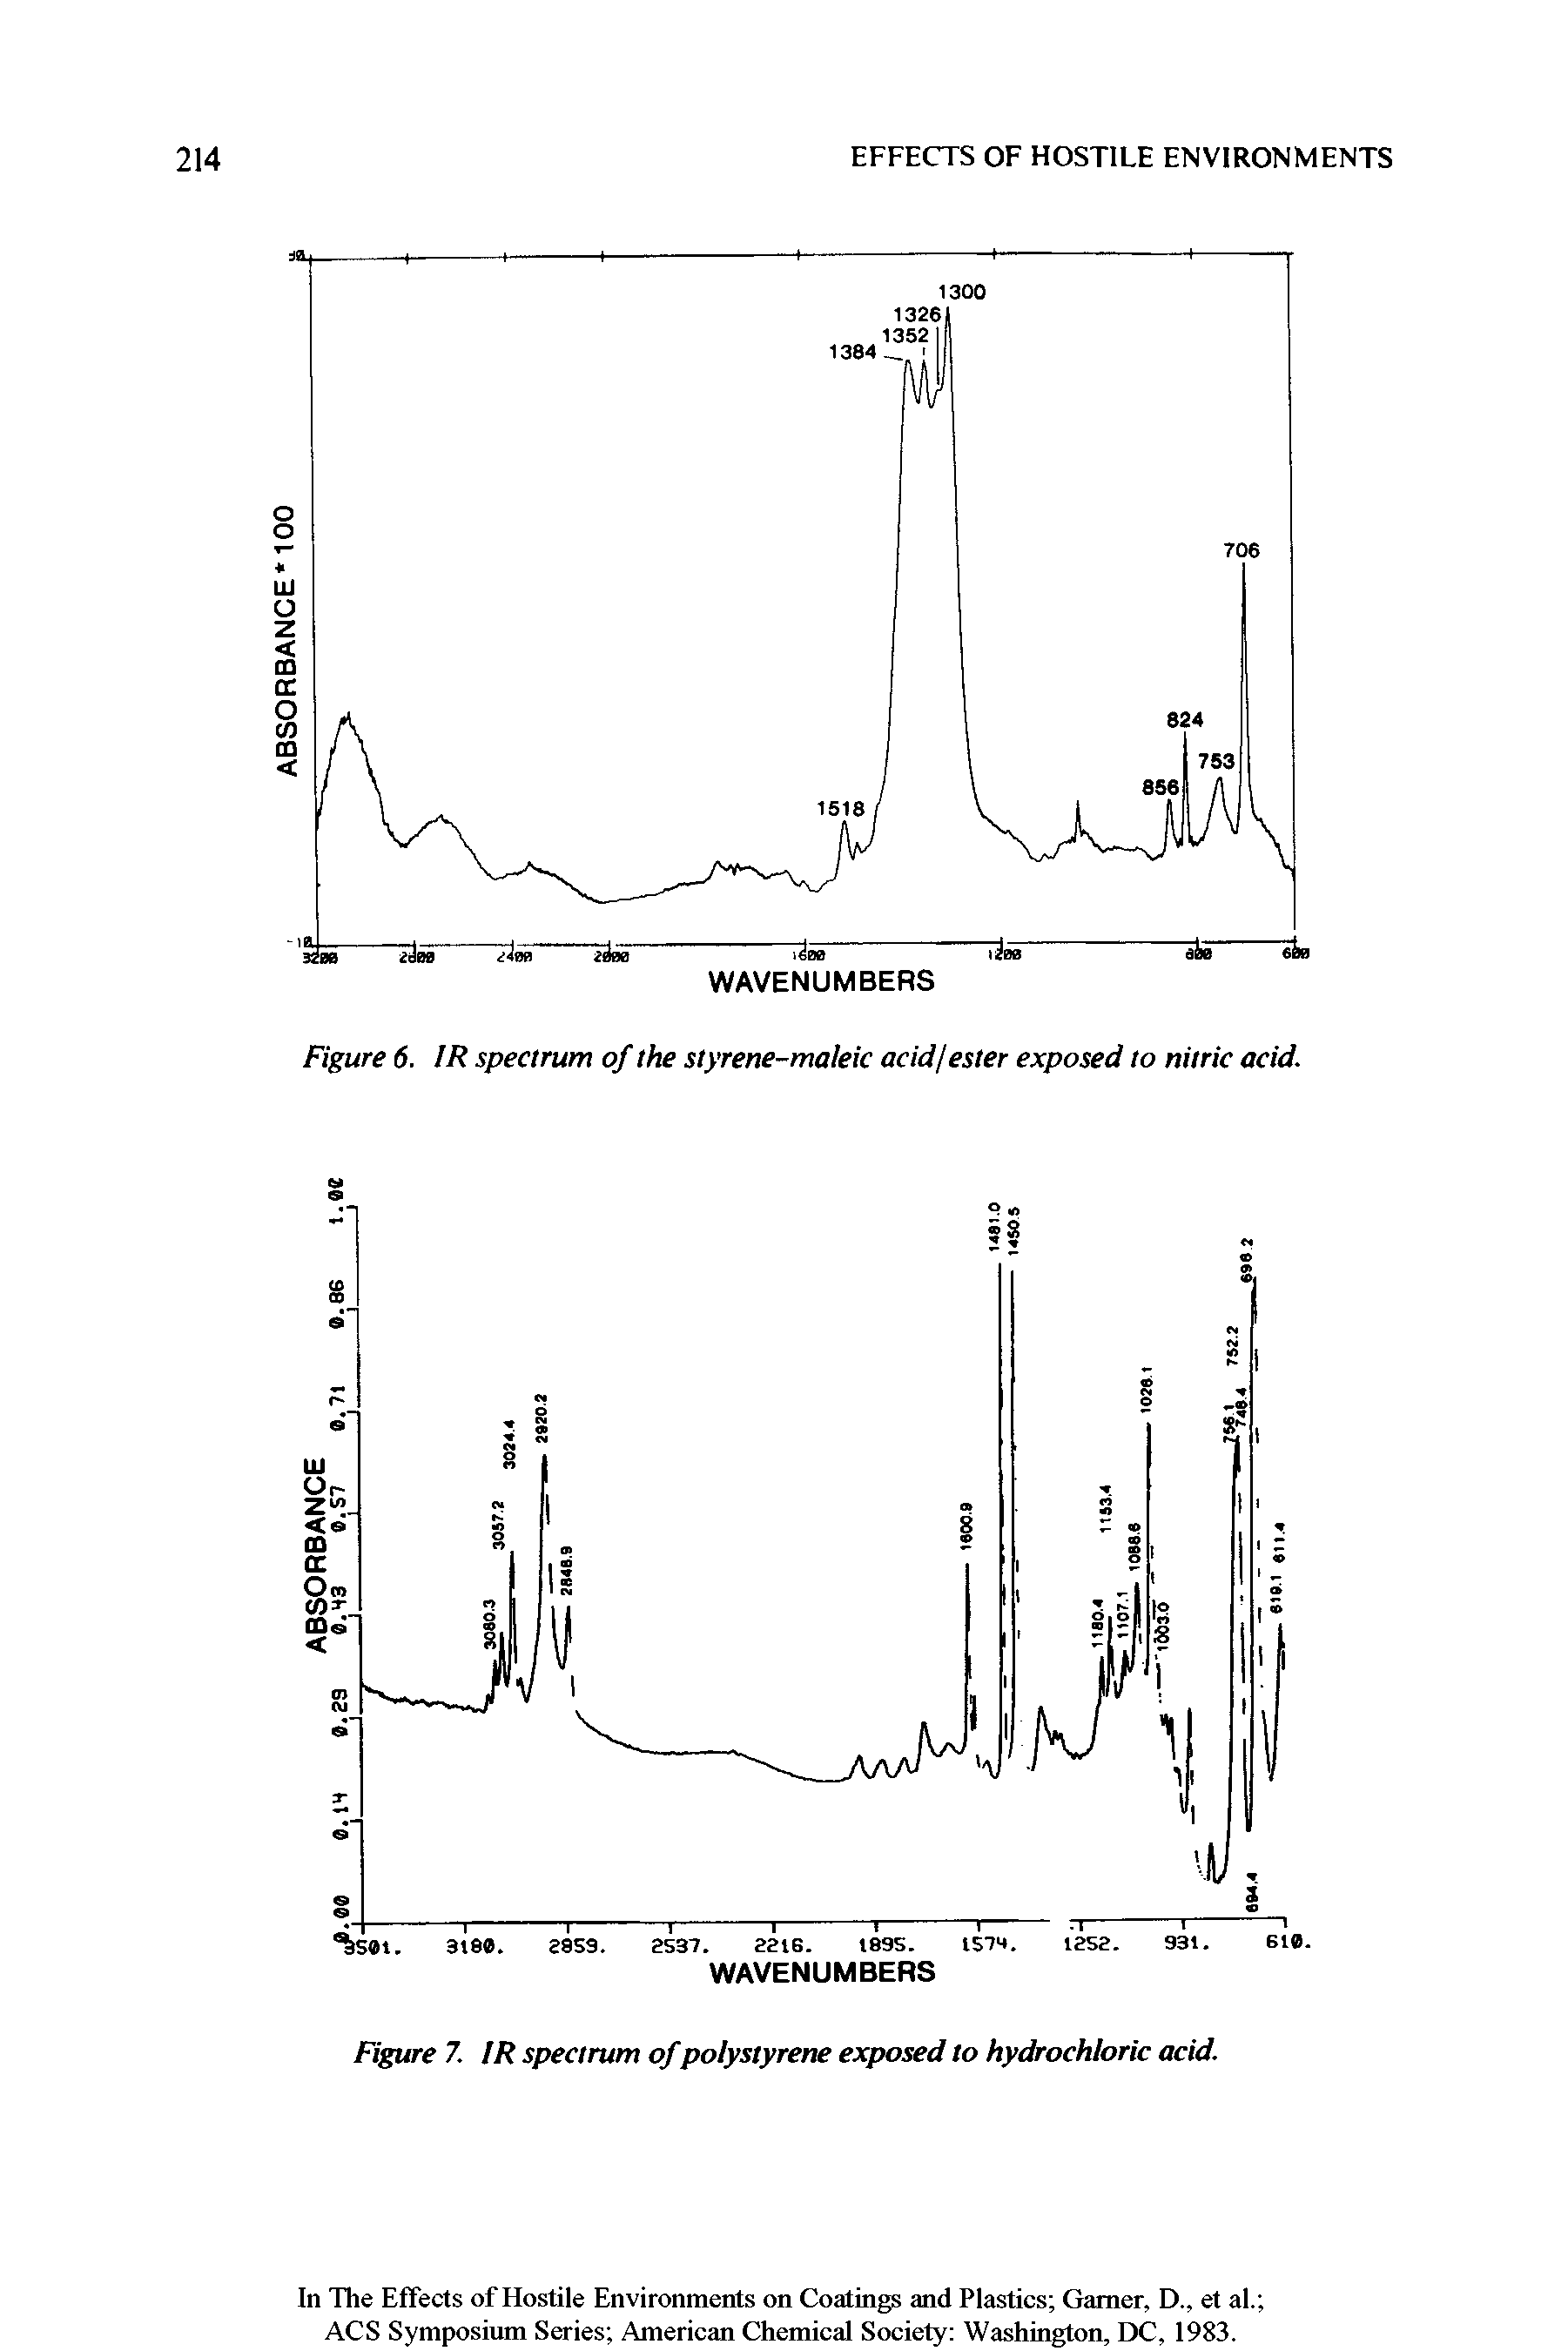 Figure 6. IR spectrum of the styrene-maleic acid ester exposed to nitric acid.